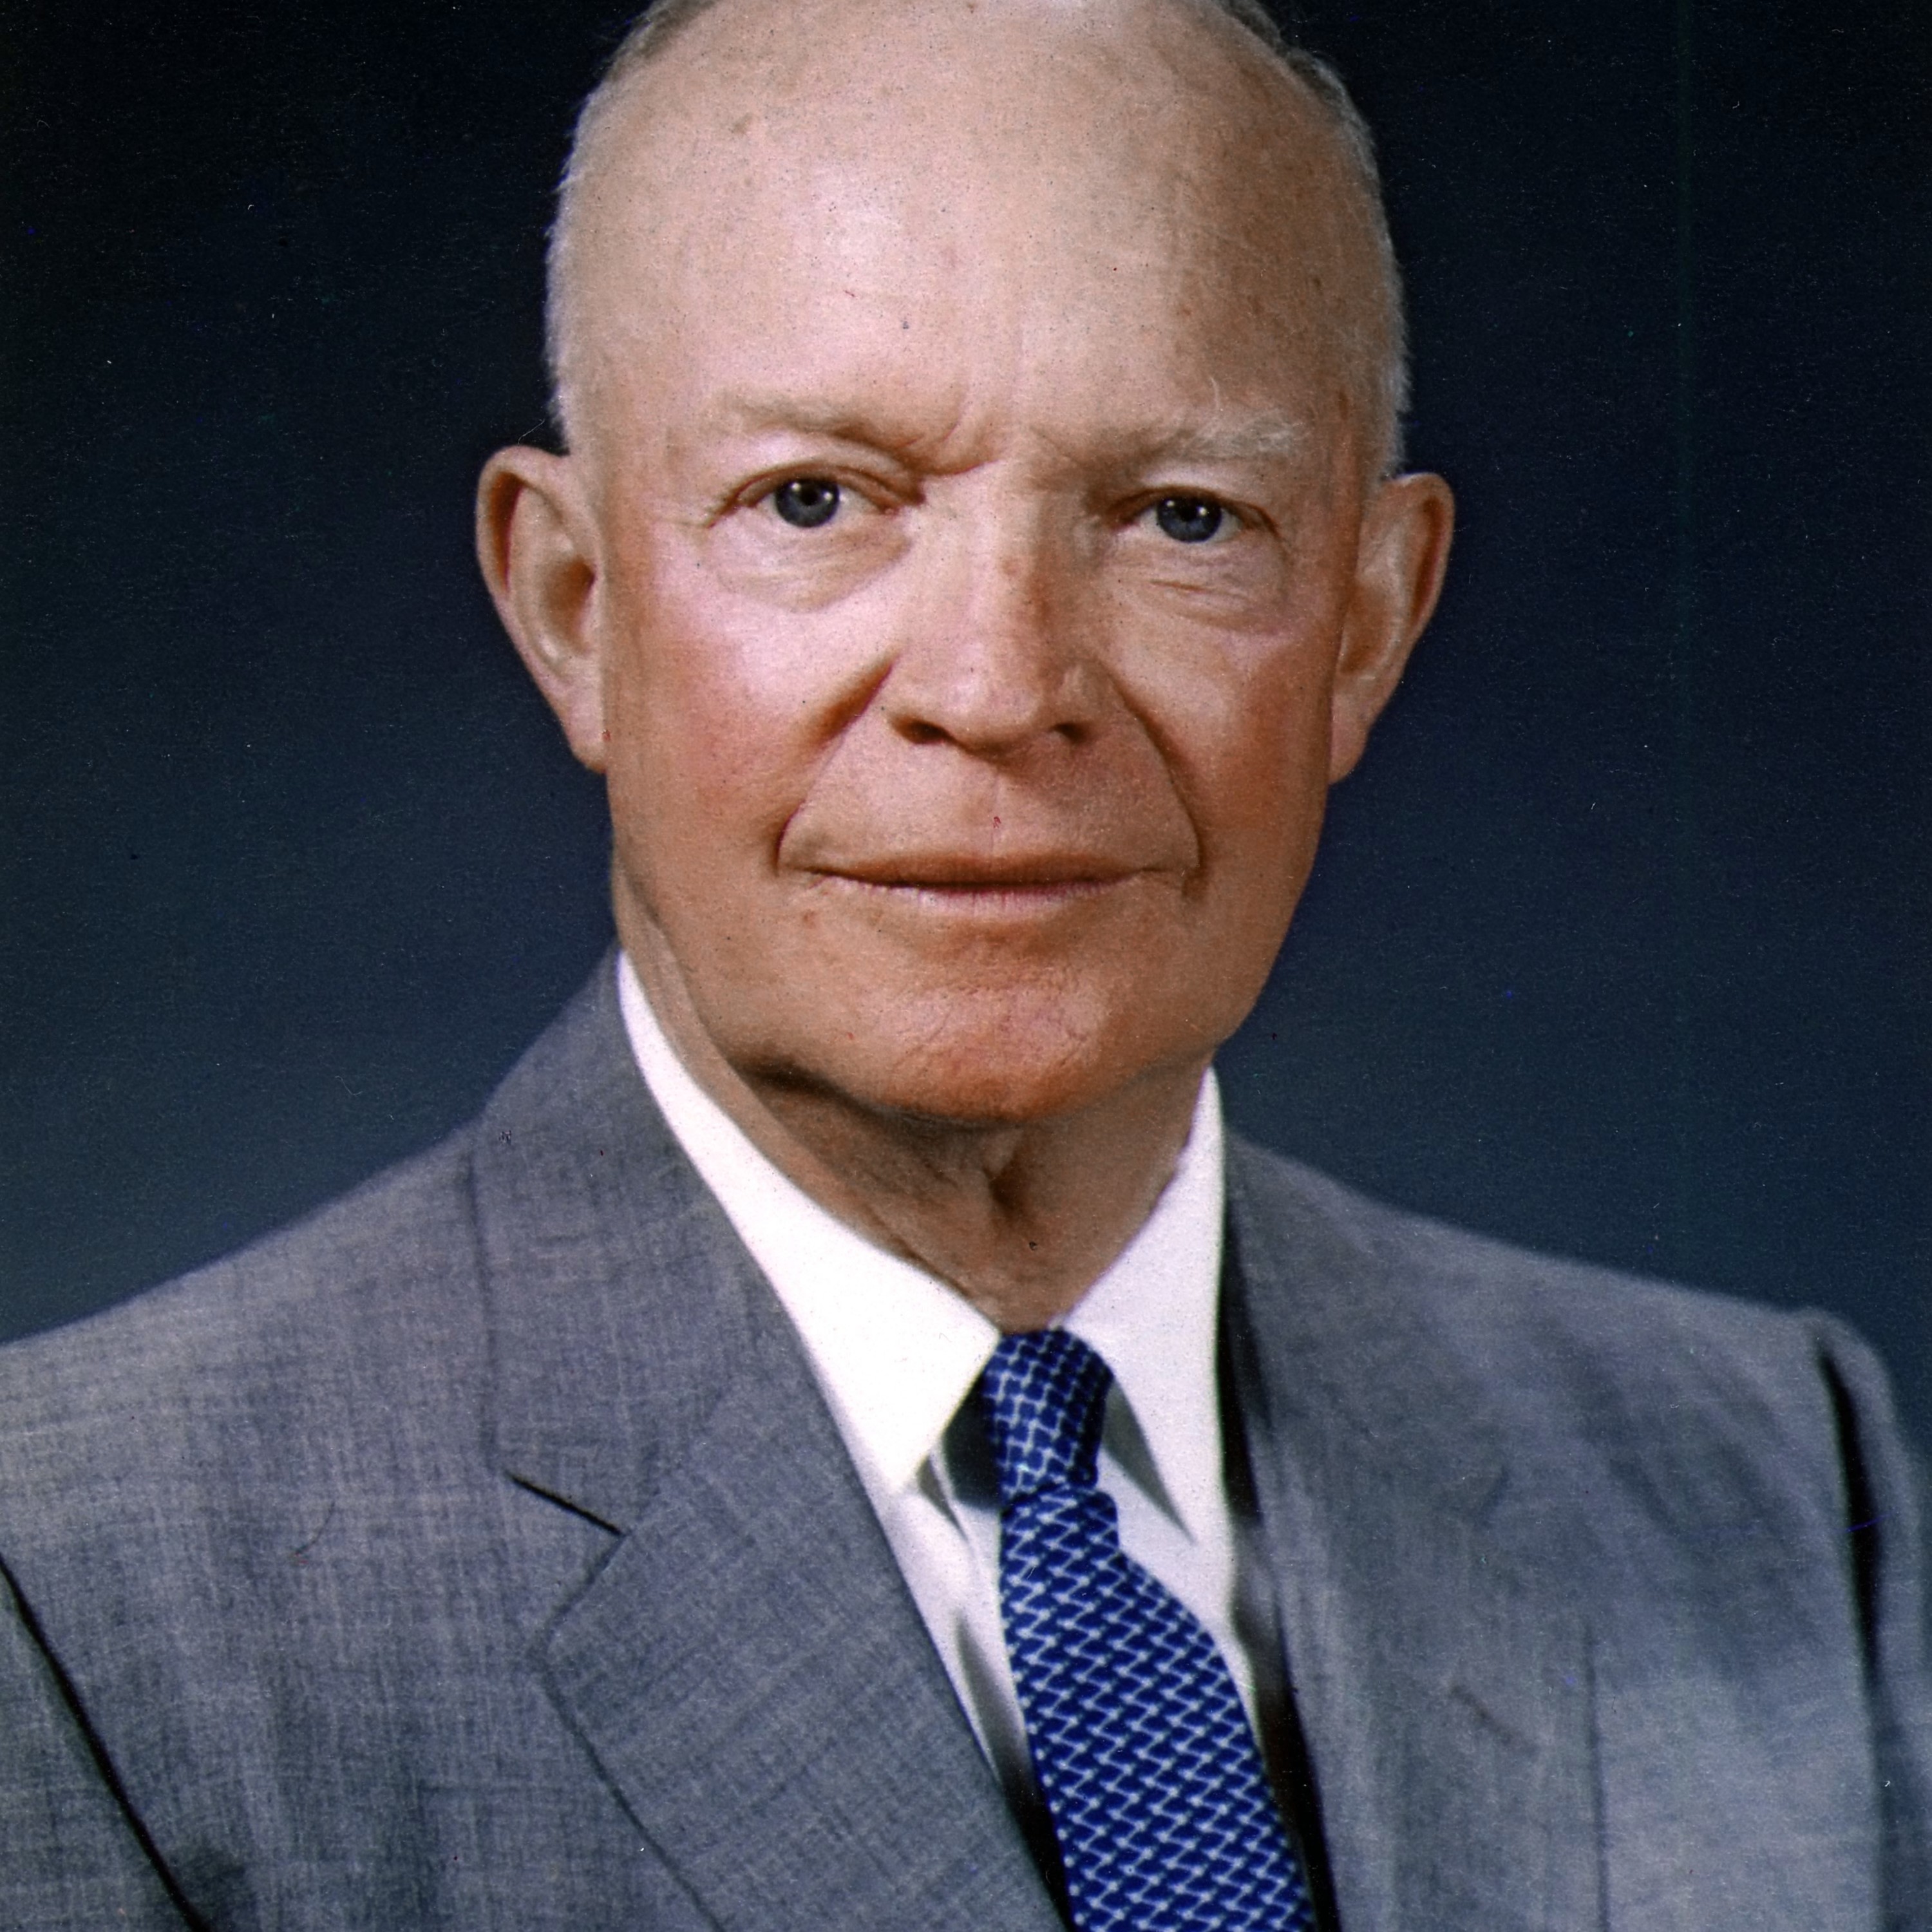 Dwight_D._Eisenhower,_official_photo_portrait,_May_29,_1959.jpg